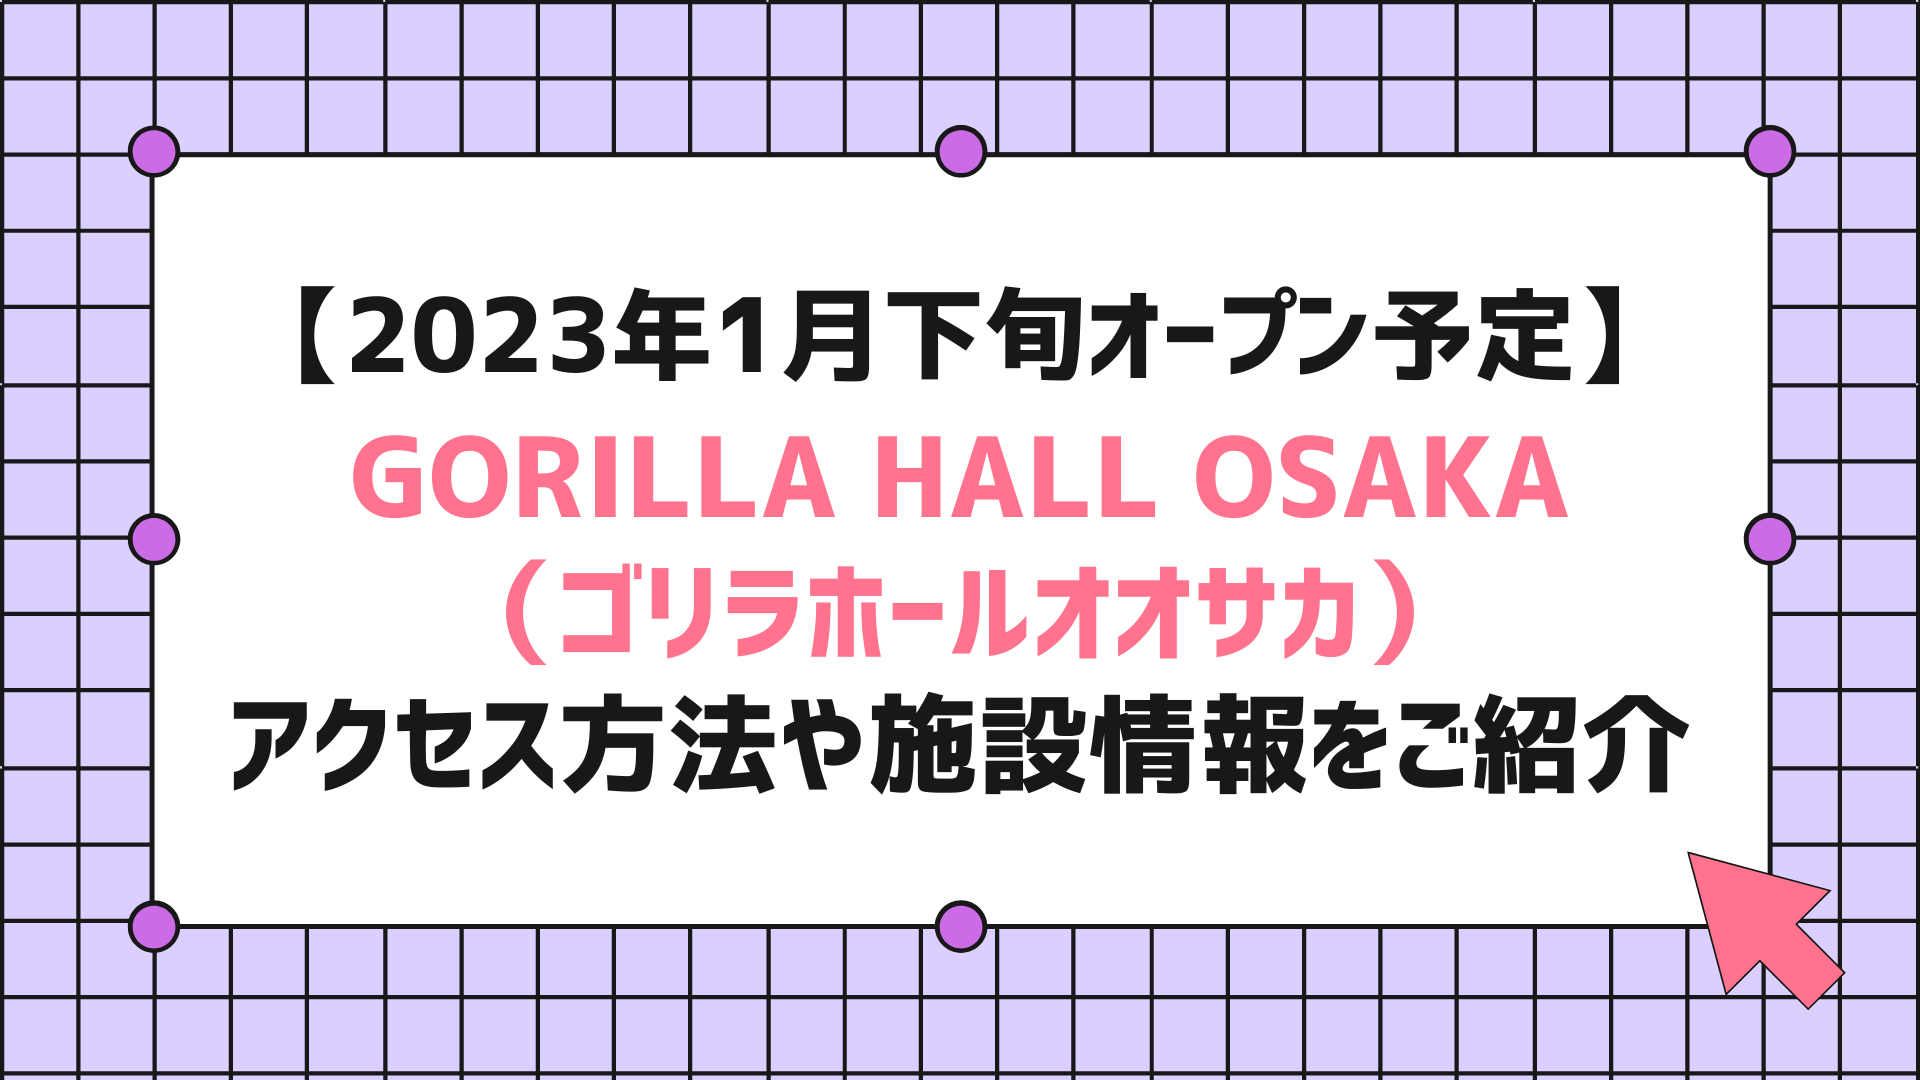 GORILLA HALL OSAKA（ゴリラホールオオサカ）のアクセス方法や施設情報をご紹介【2023年1月下旬オープン予定】